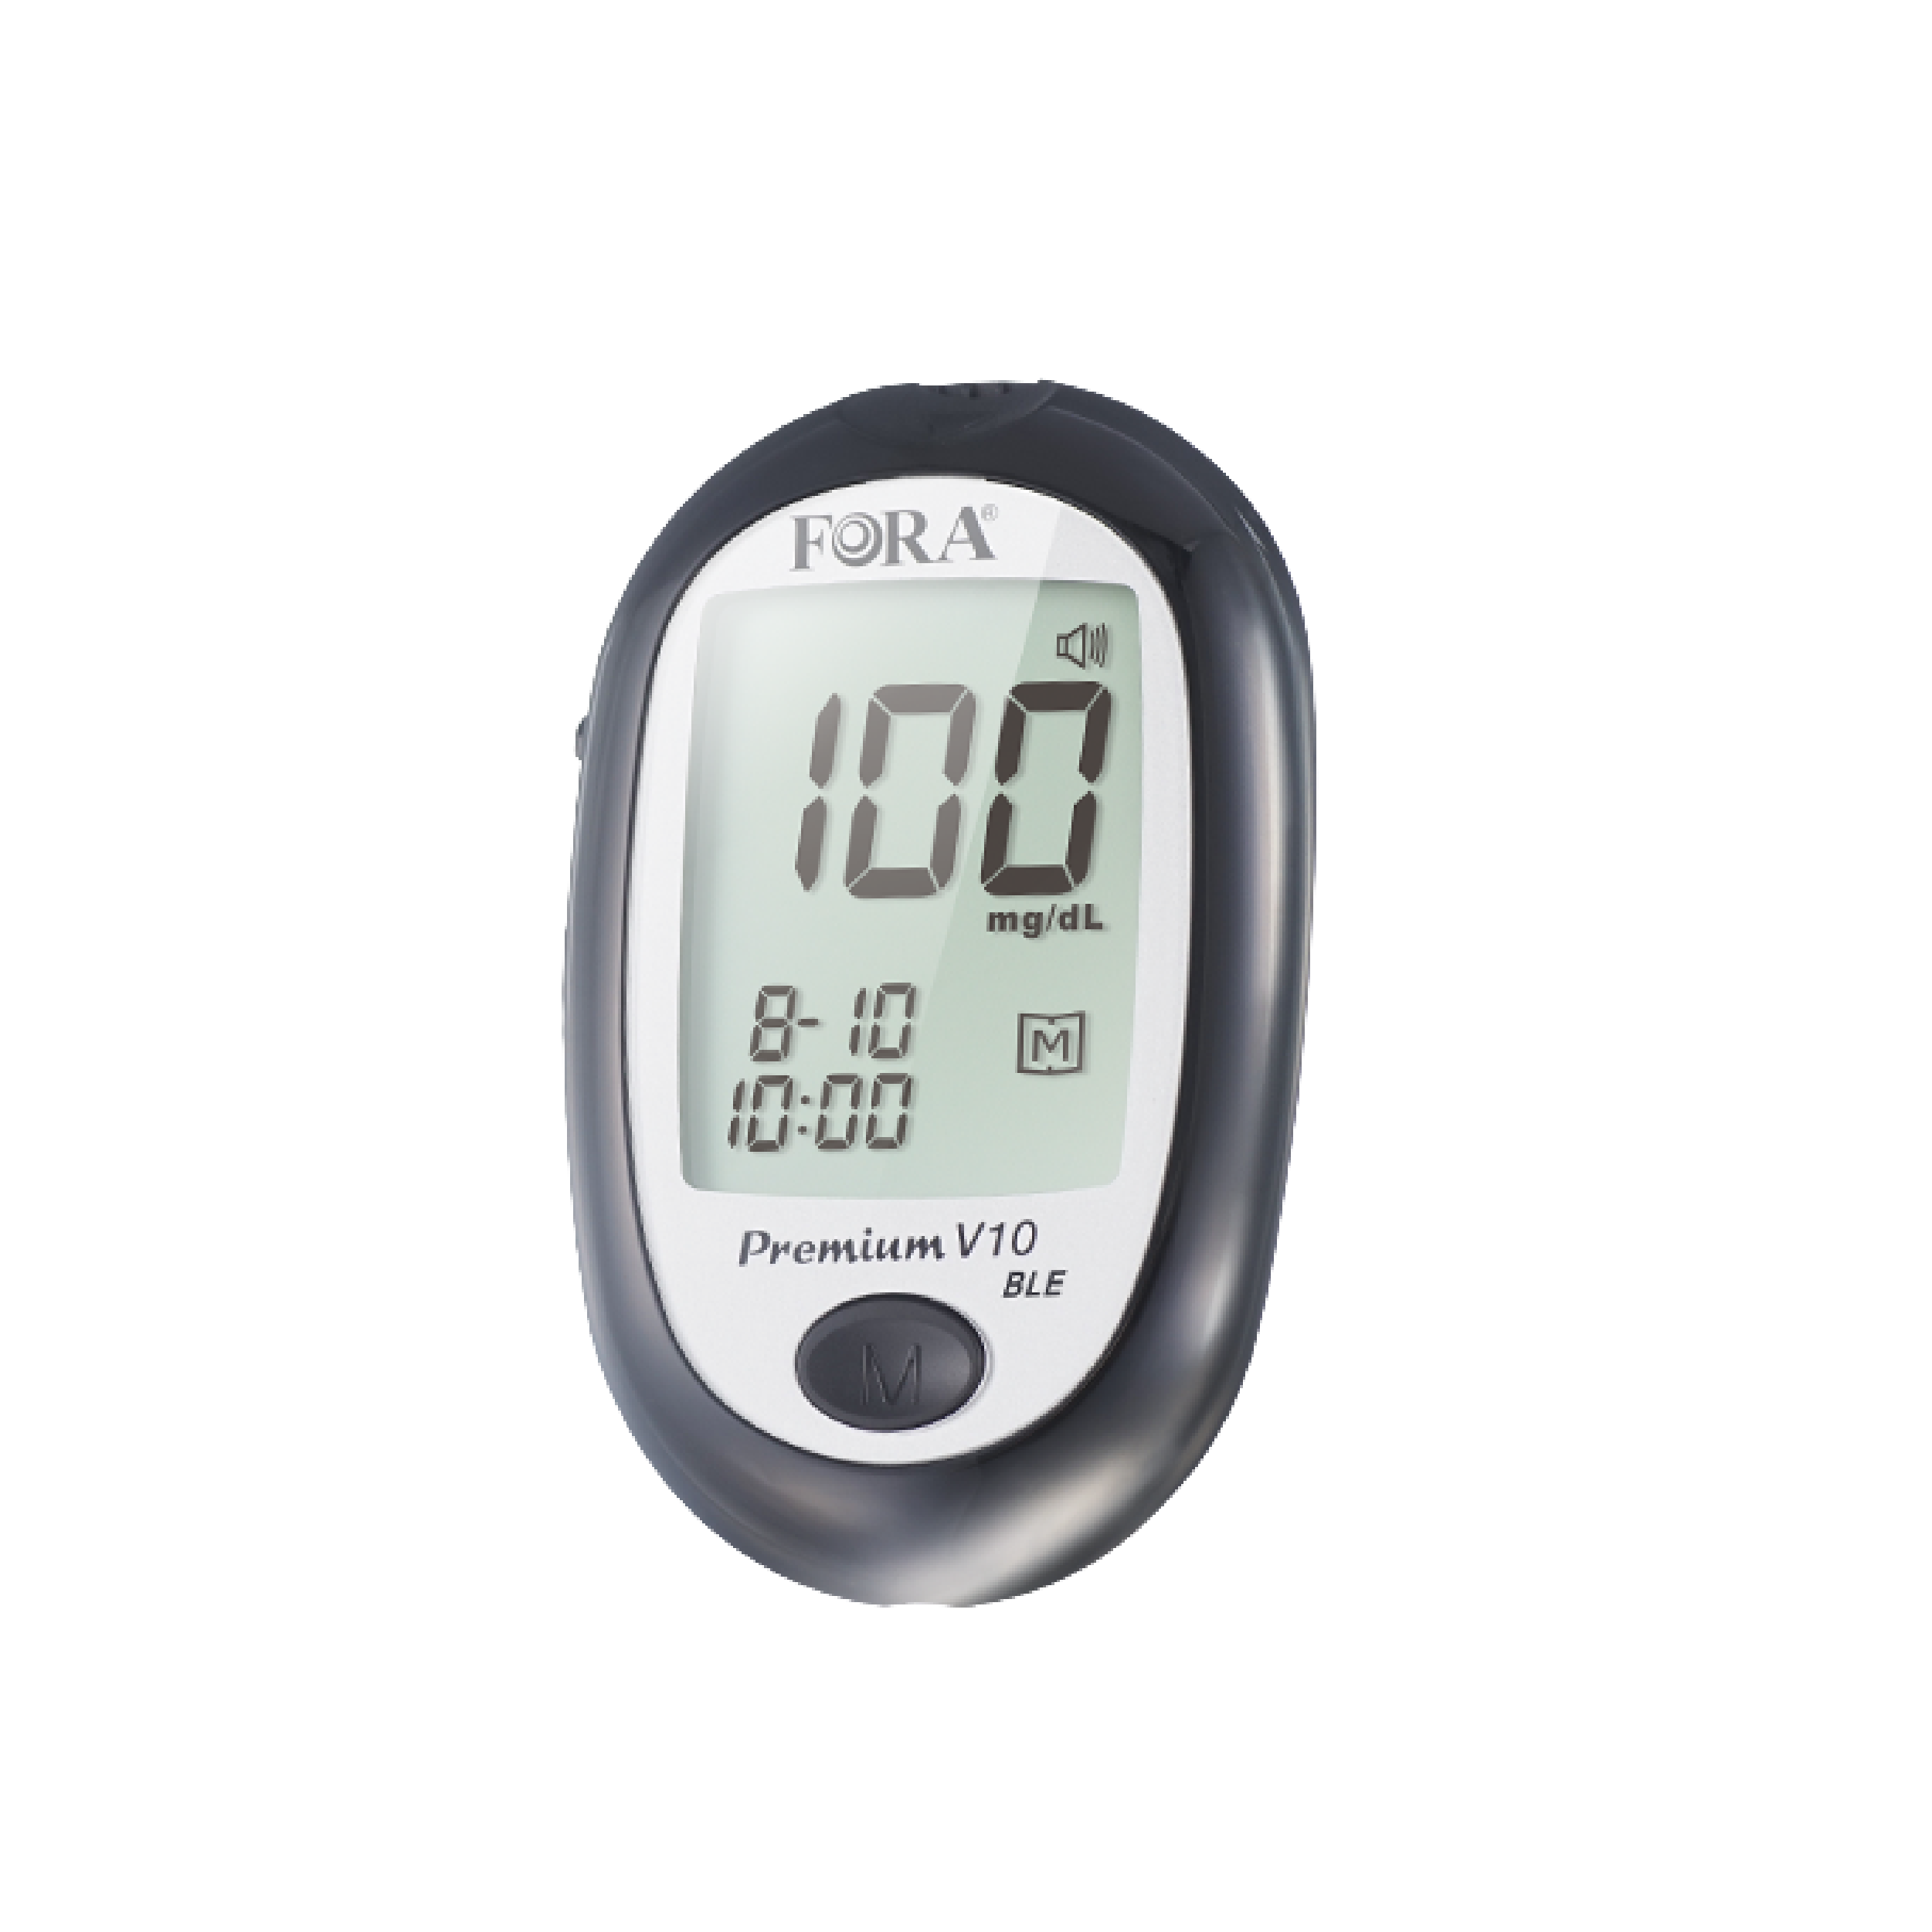 Fora Premium V10 BLE Talking Blood Glucose Meter, Bluetooth 4.0